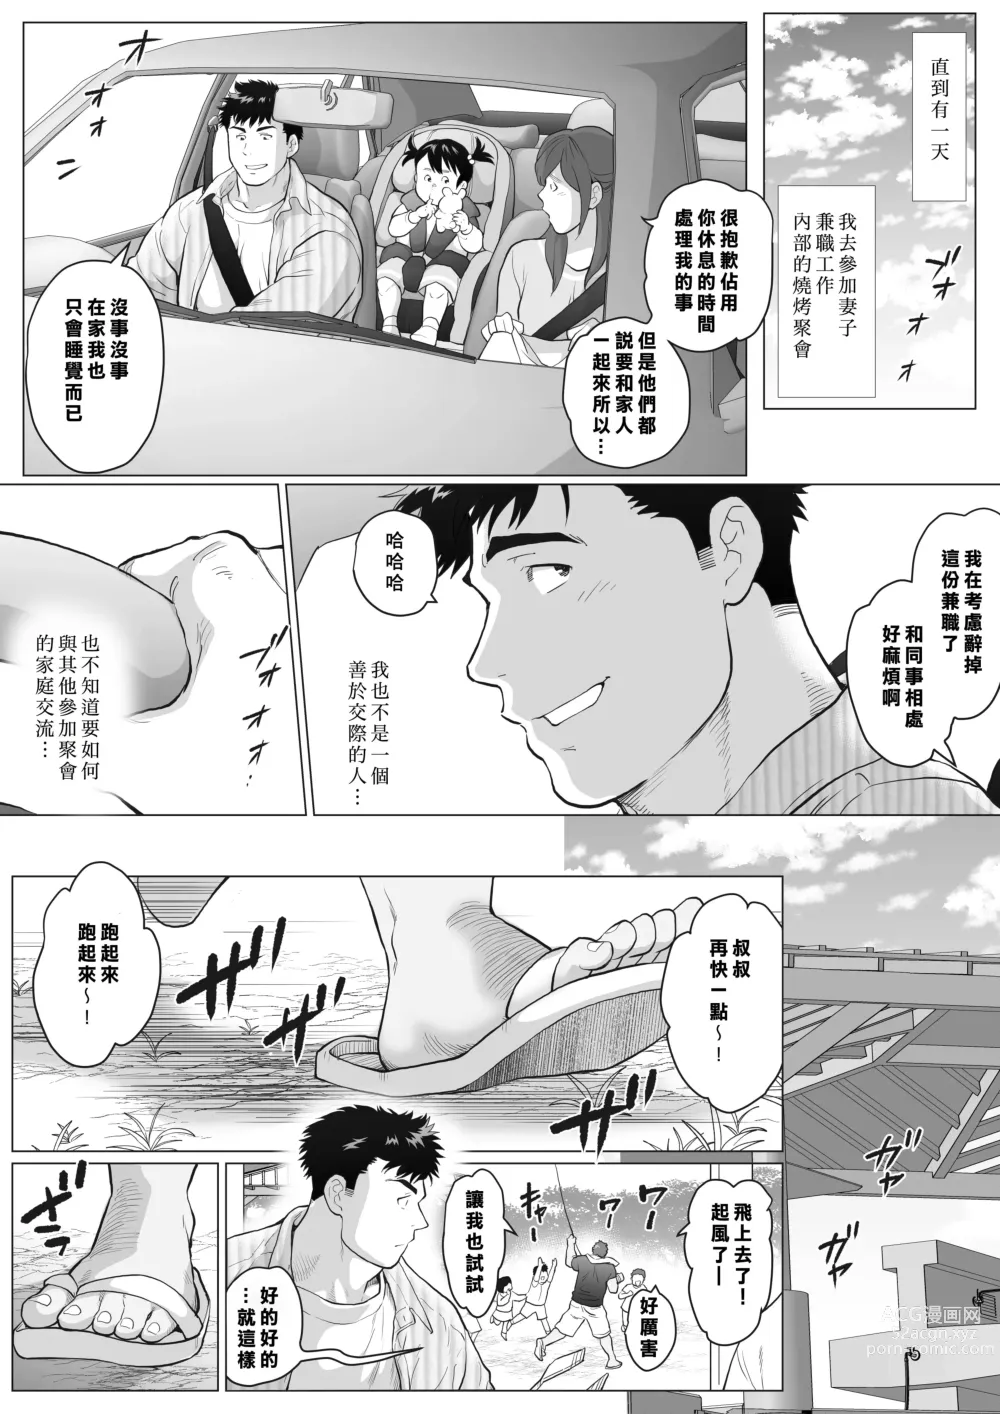 Page 4 of manga 直人爸爸与友幸爸爸 第一话